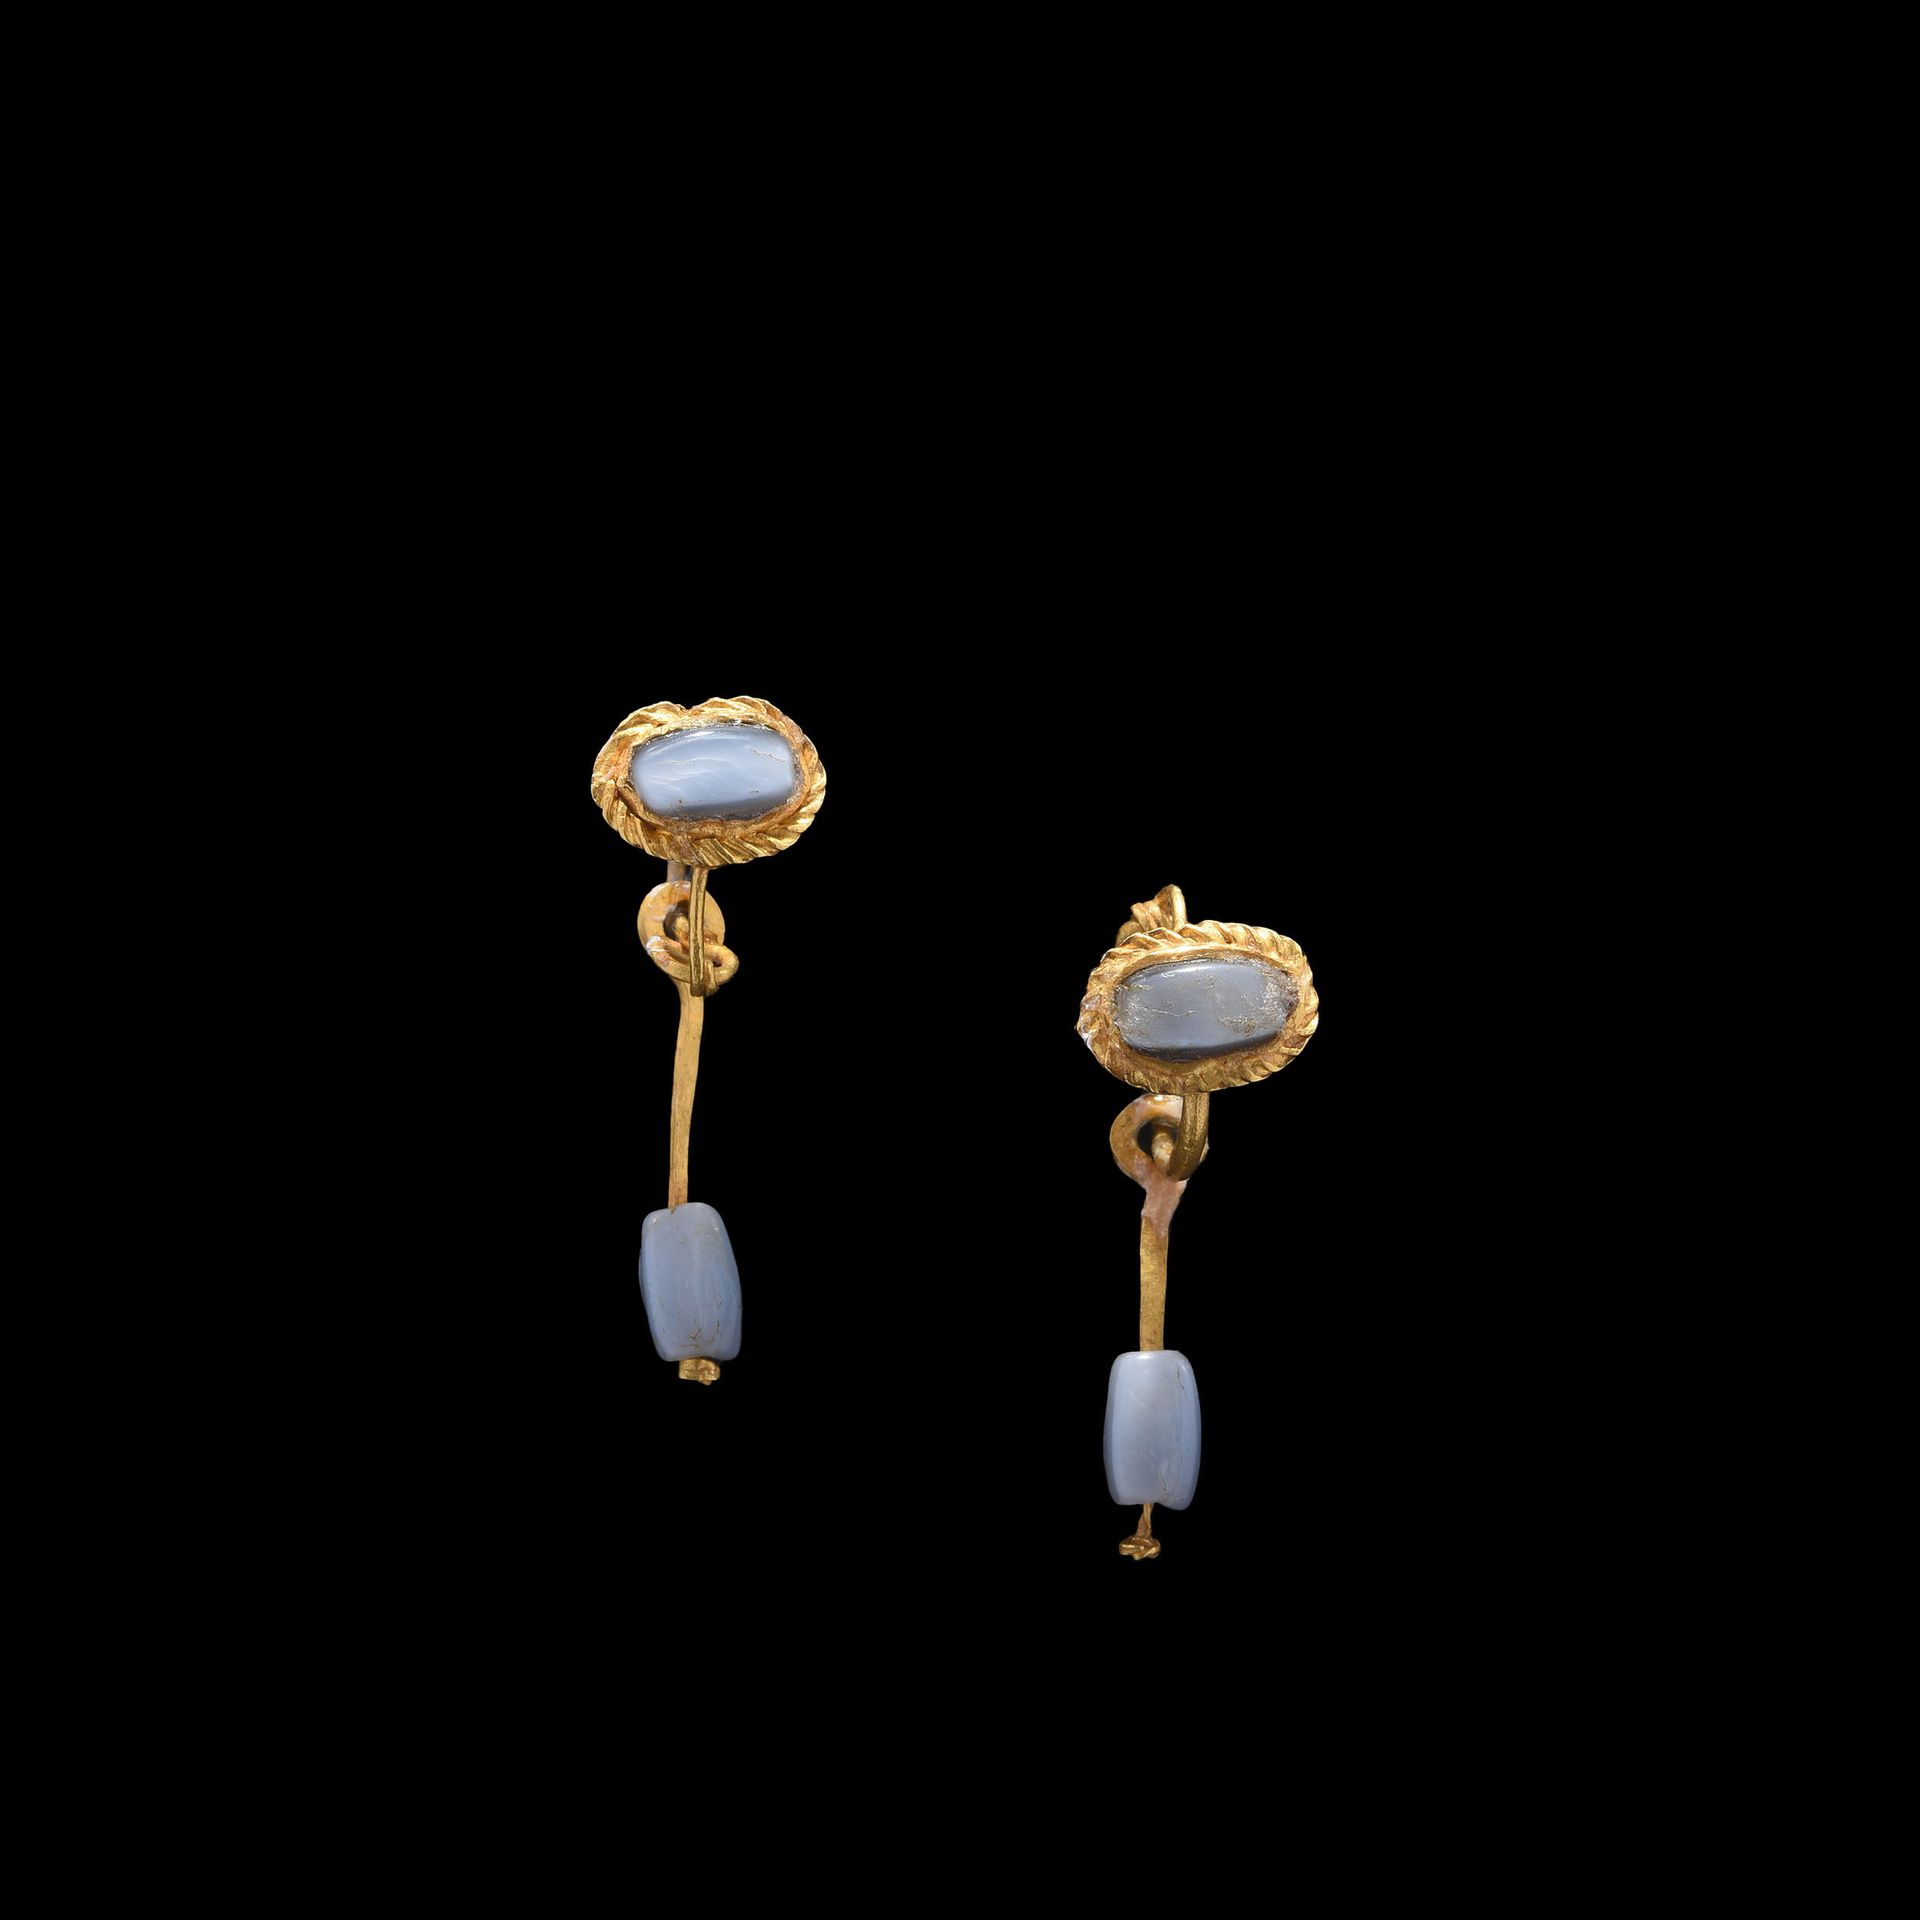 Null 耳环一对

罗马艺术，1-2世纪。

黄金，镶有蓝玉髓珠子。

长27毫米；重3克



出处

前L先生的私人收藏，列于1982年7月的一份清单中。&hellip;